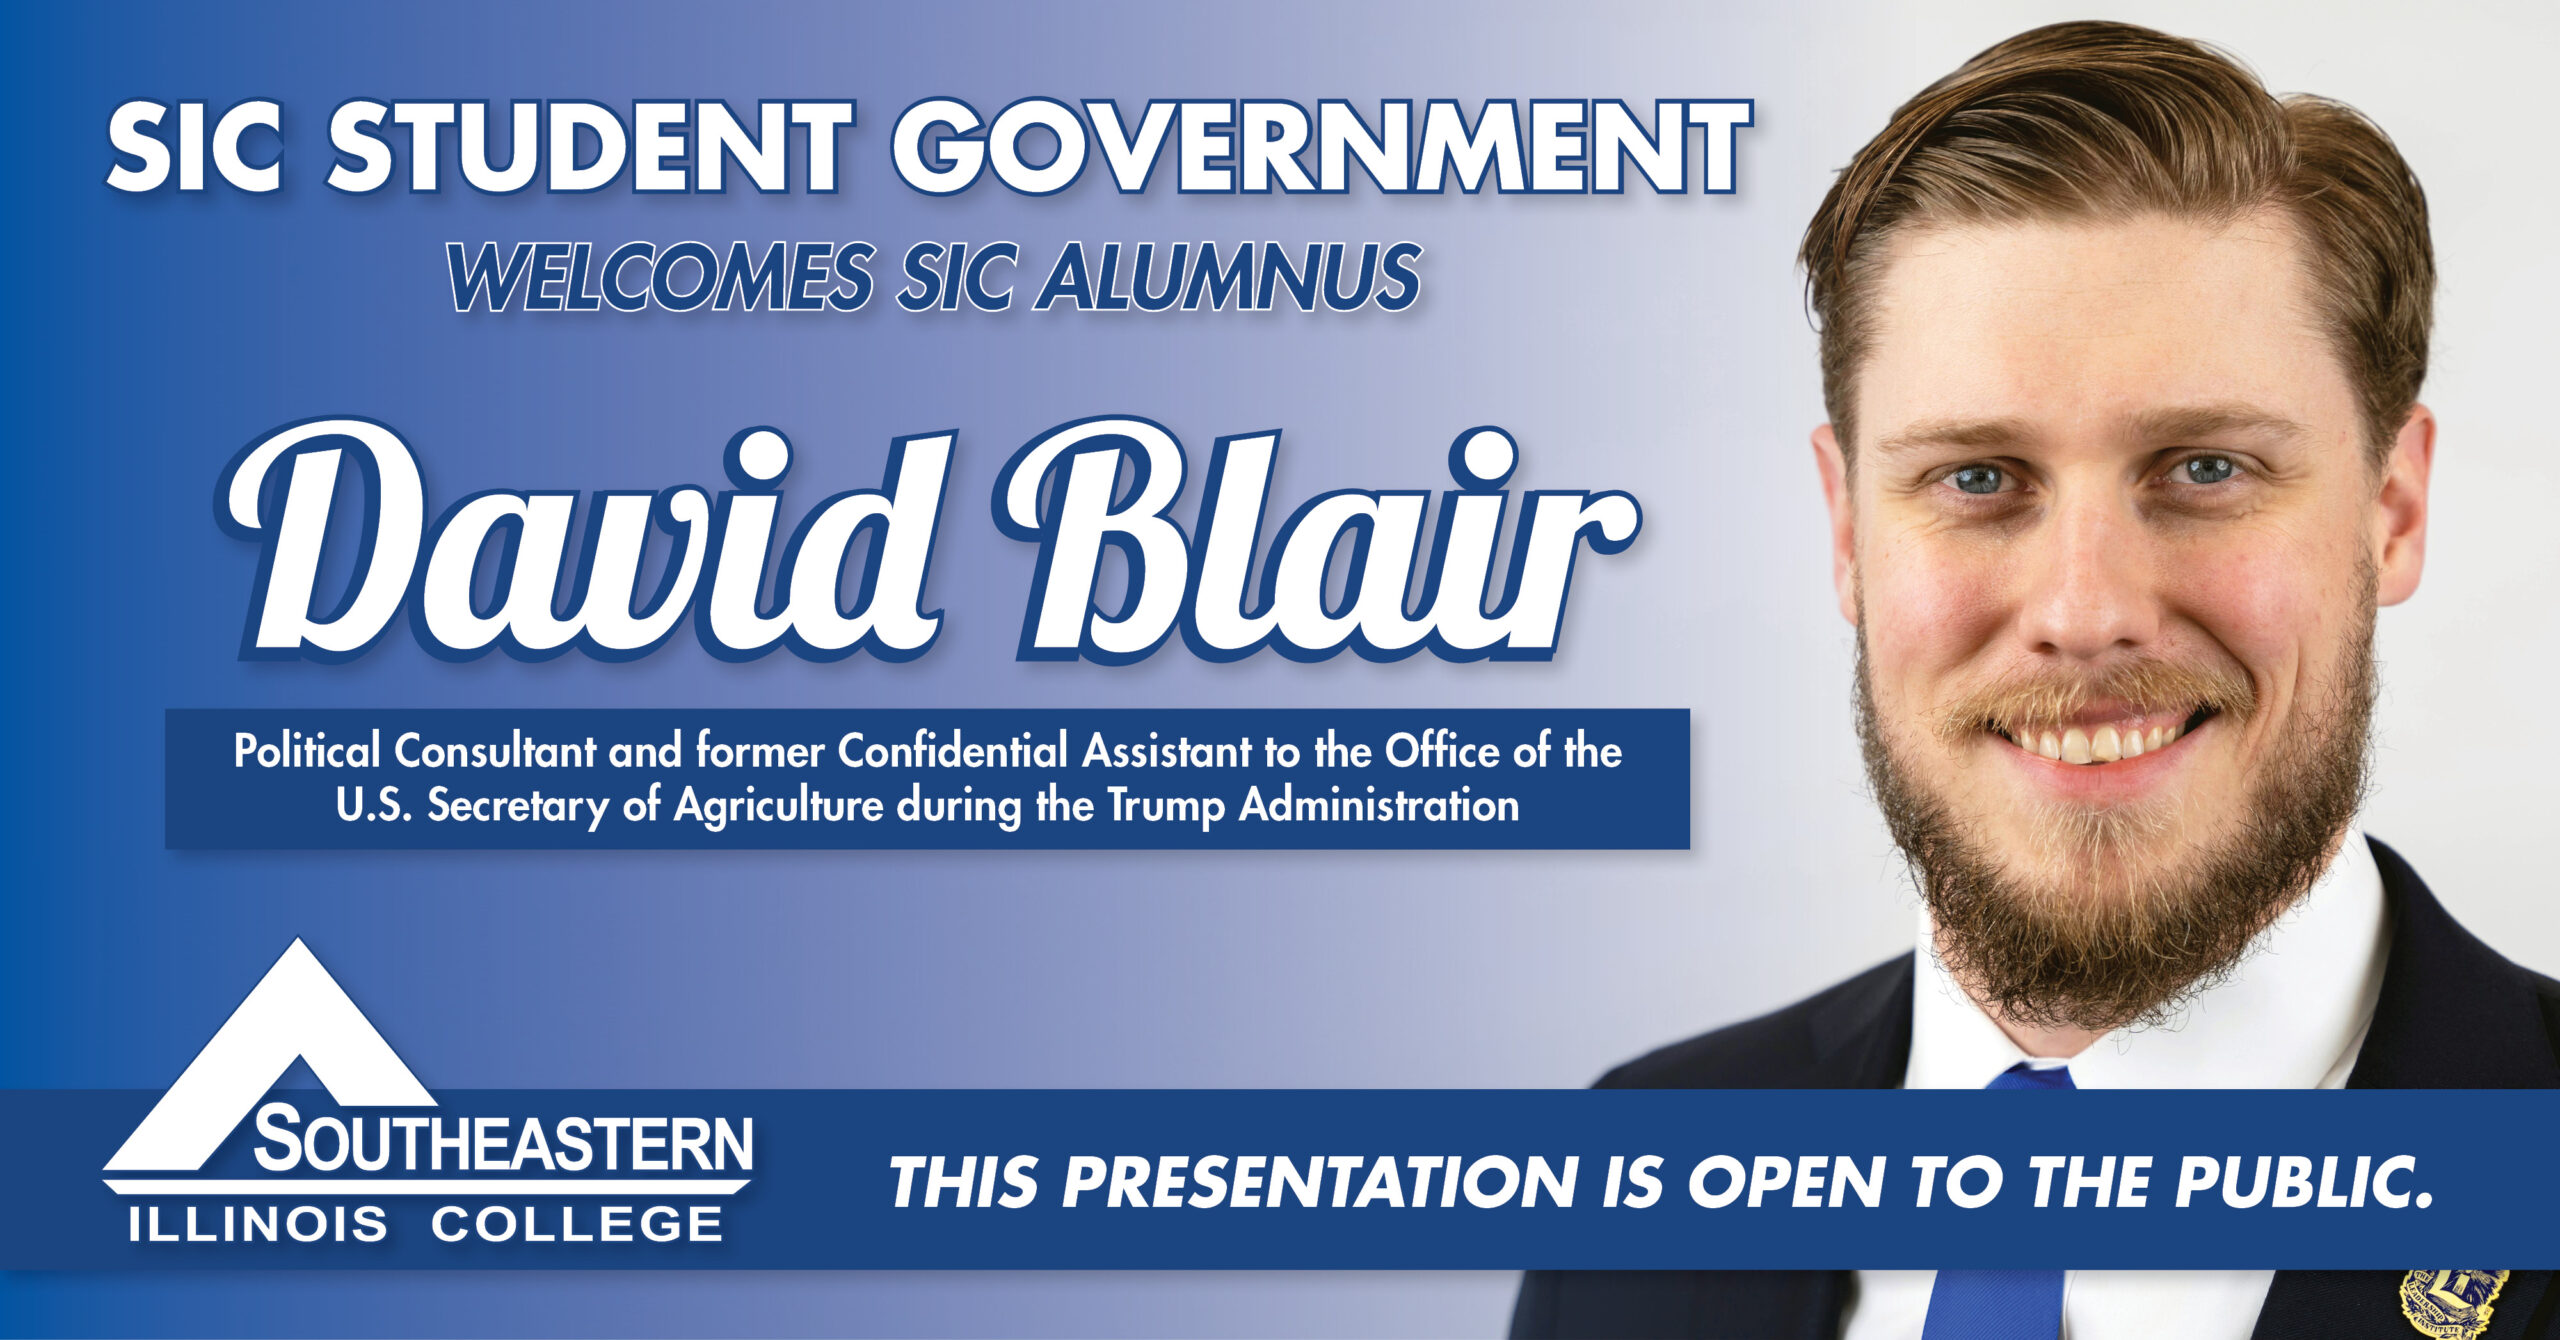 Alumnus David Blair